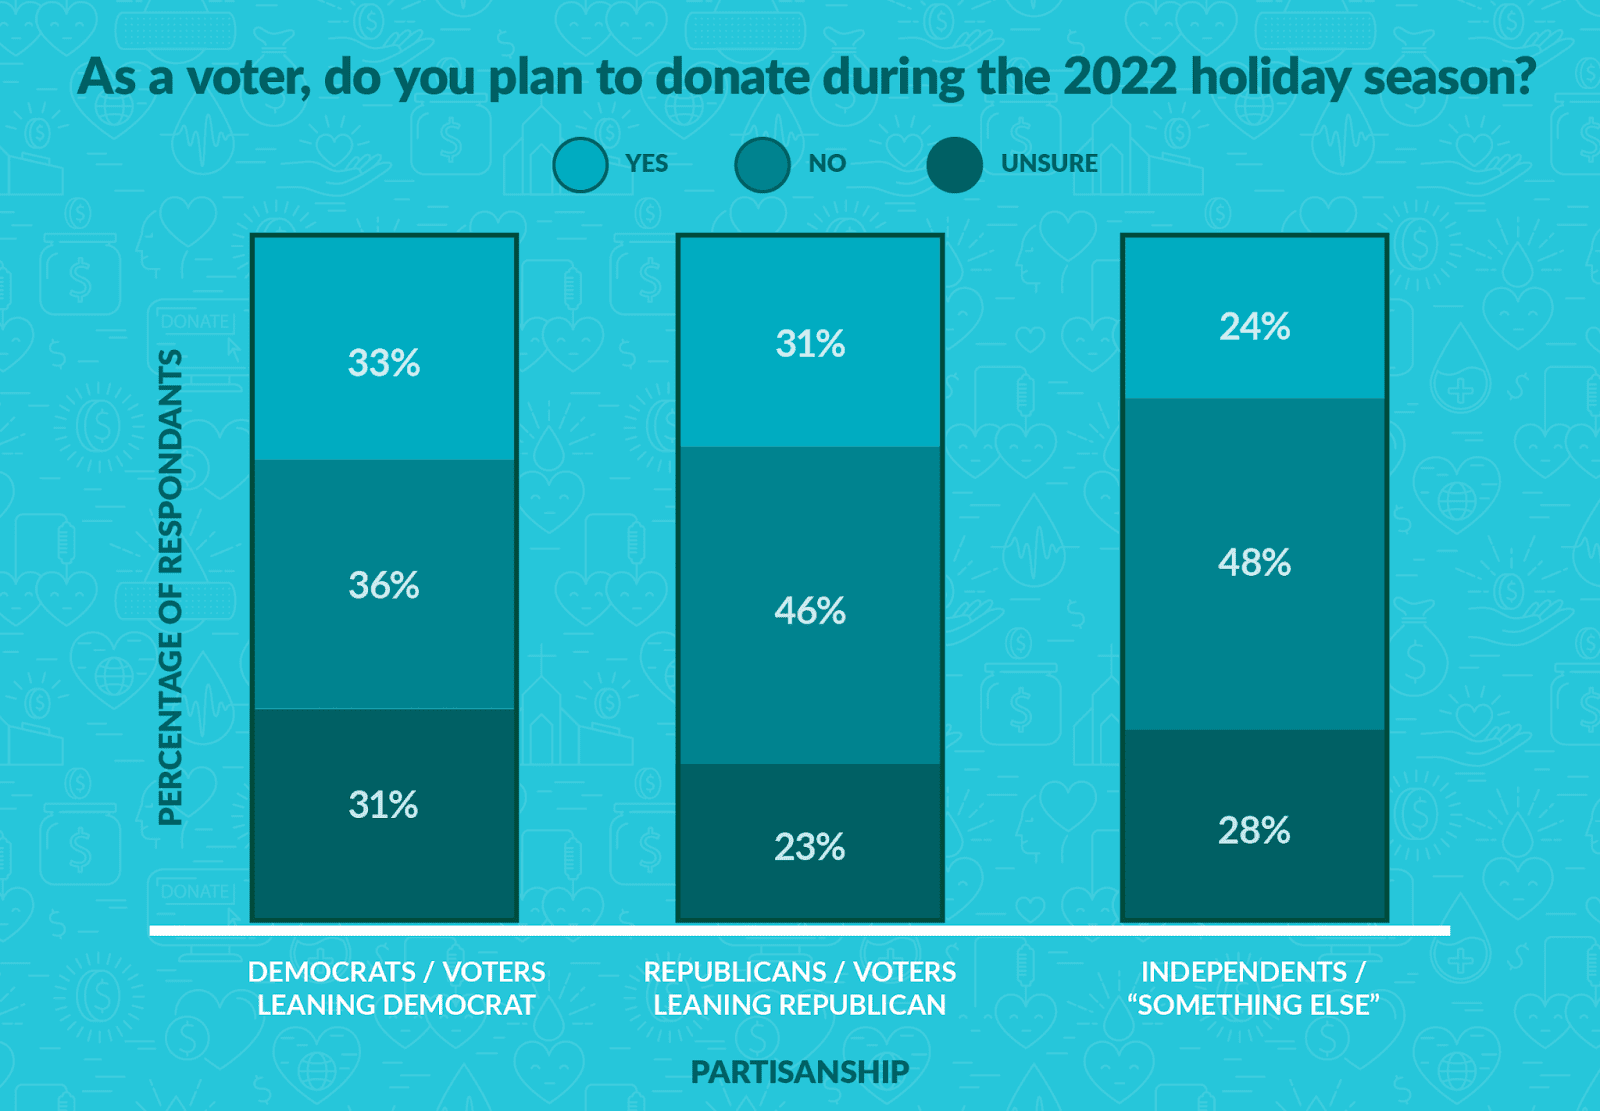 bar chart showing how partisanship influences donations